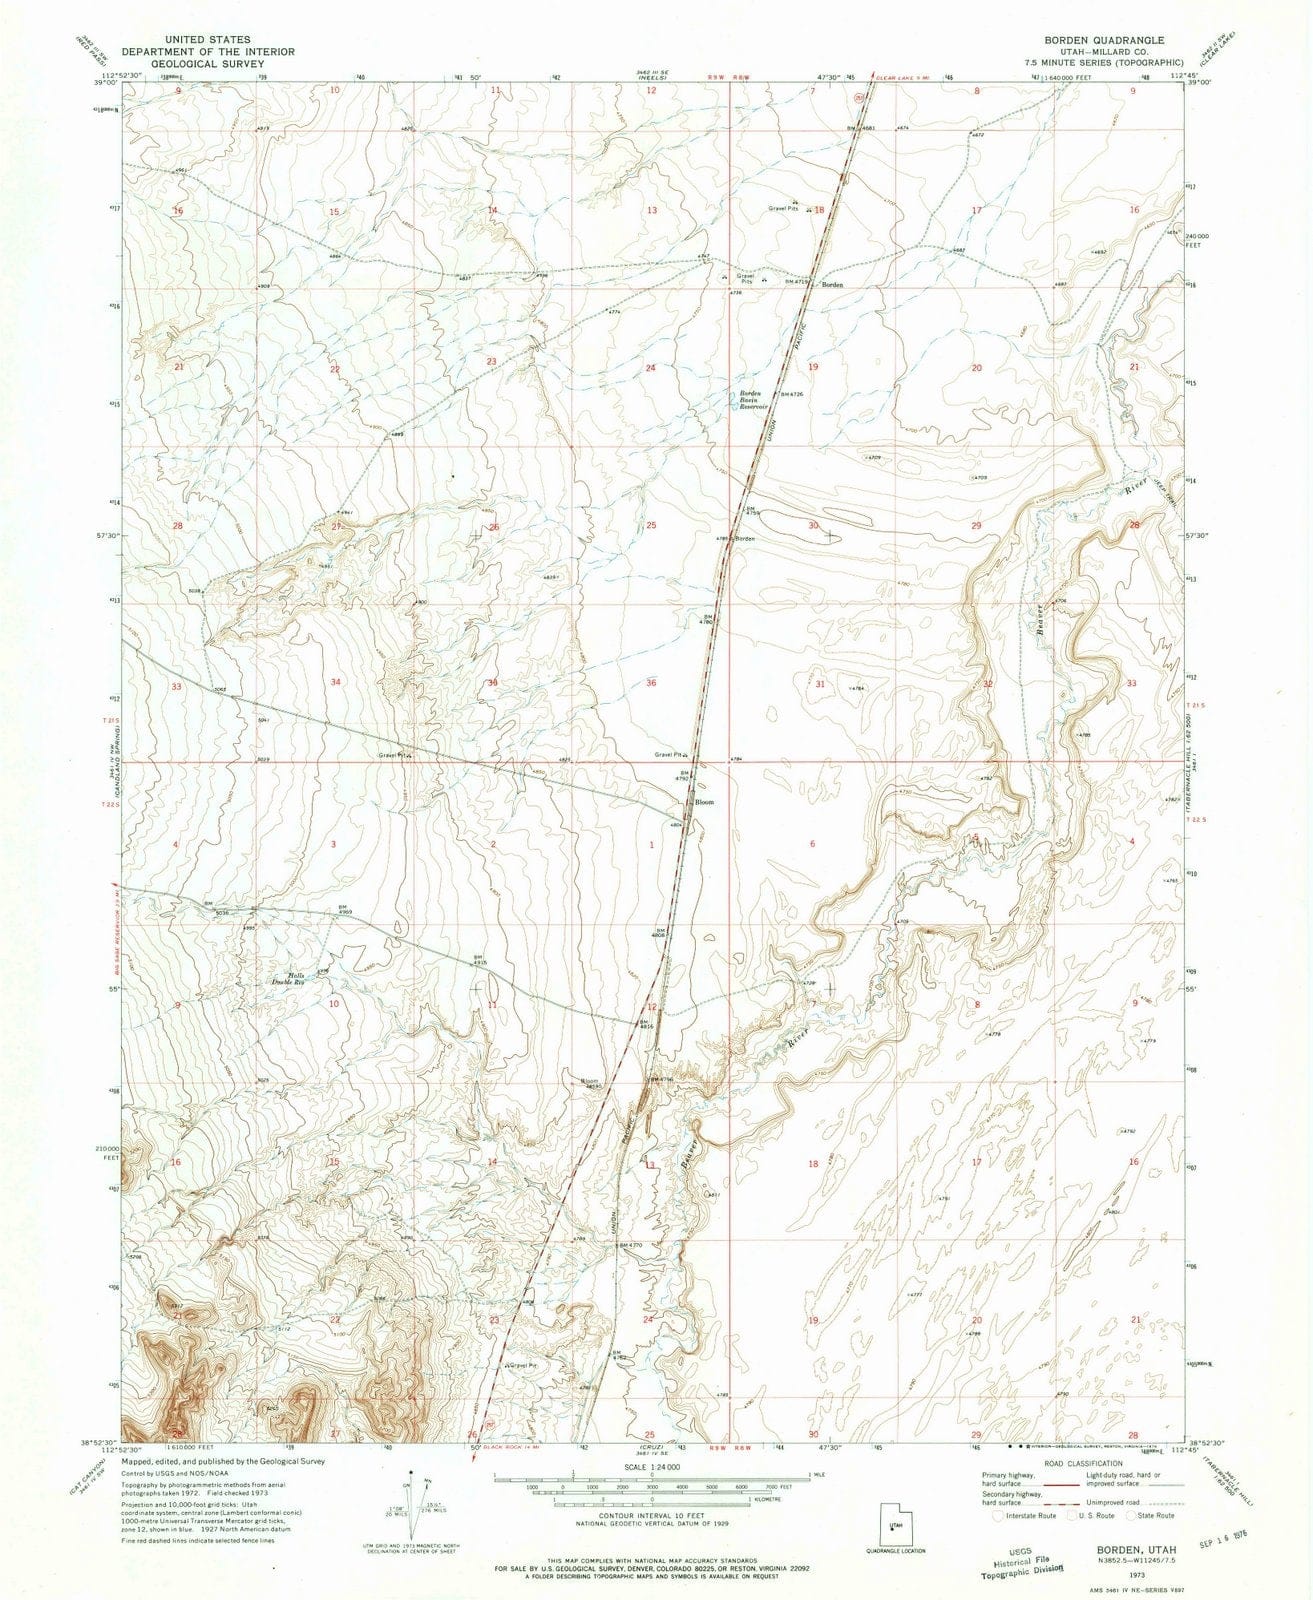 1973 Borden, UT - Utah - USGS Topographic Map